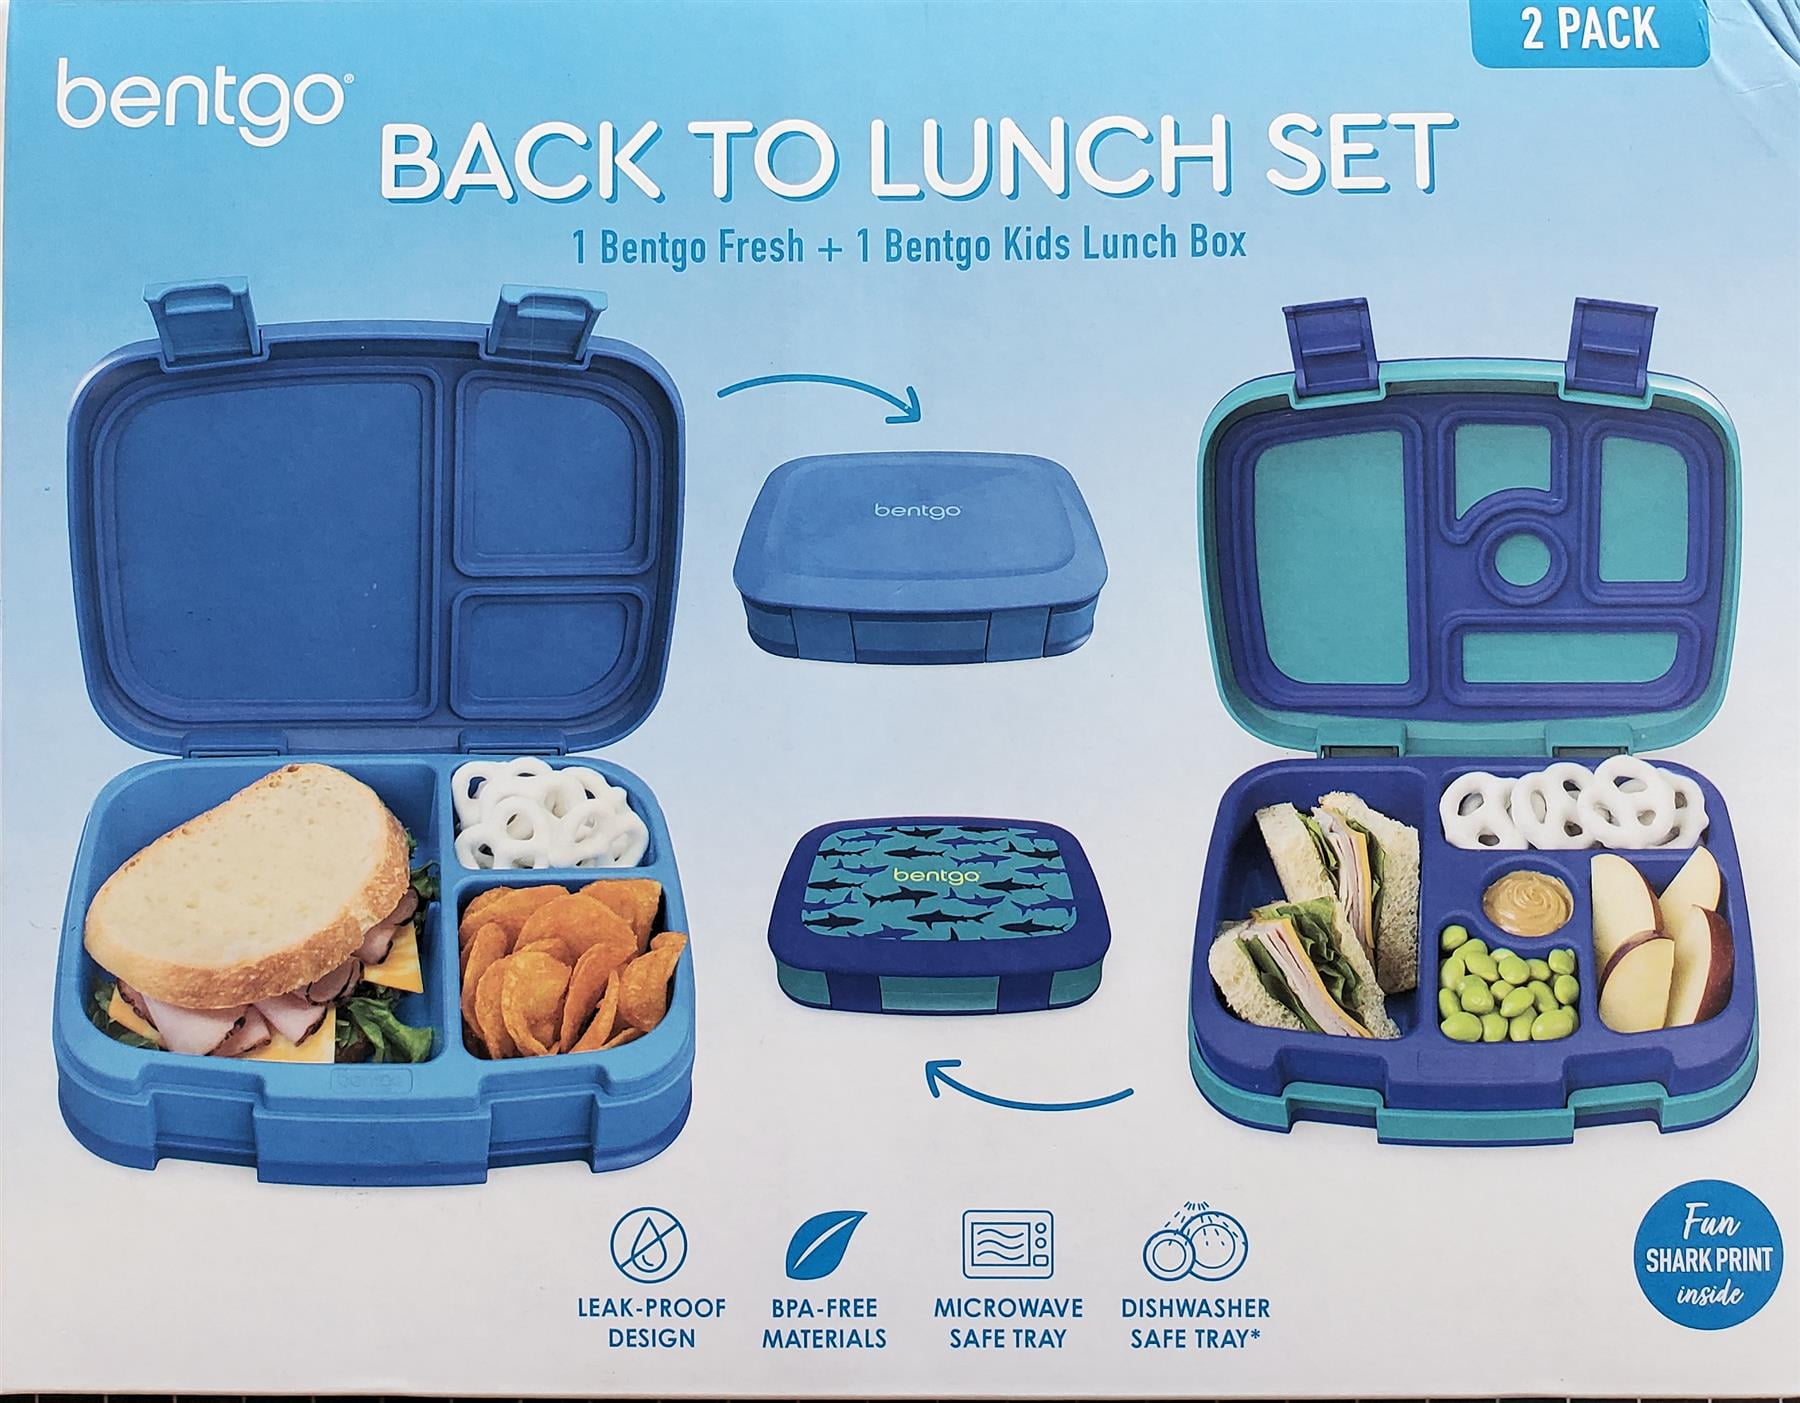 One Bentgo Fresh and One Bentgo Kids Lunch Box (Shark Print 